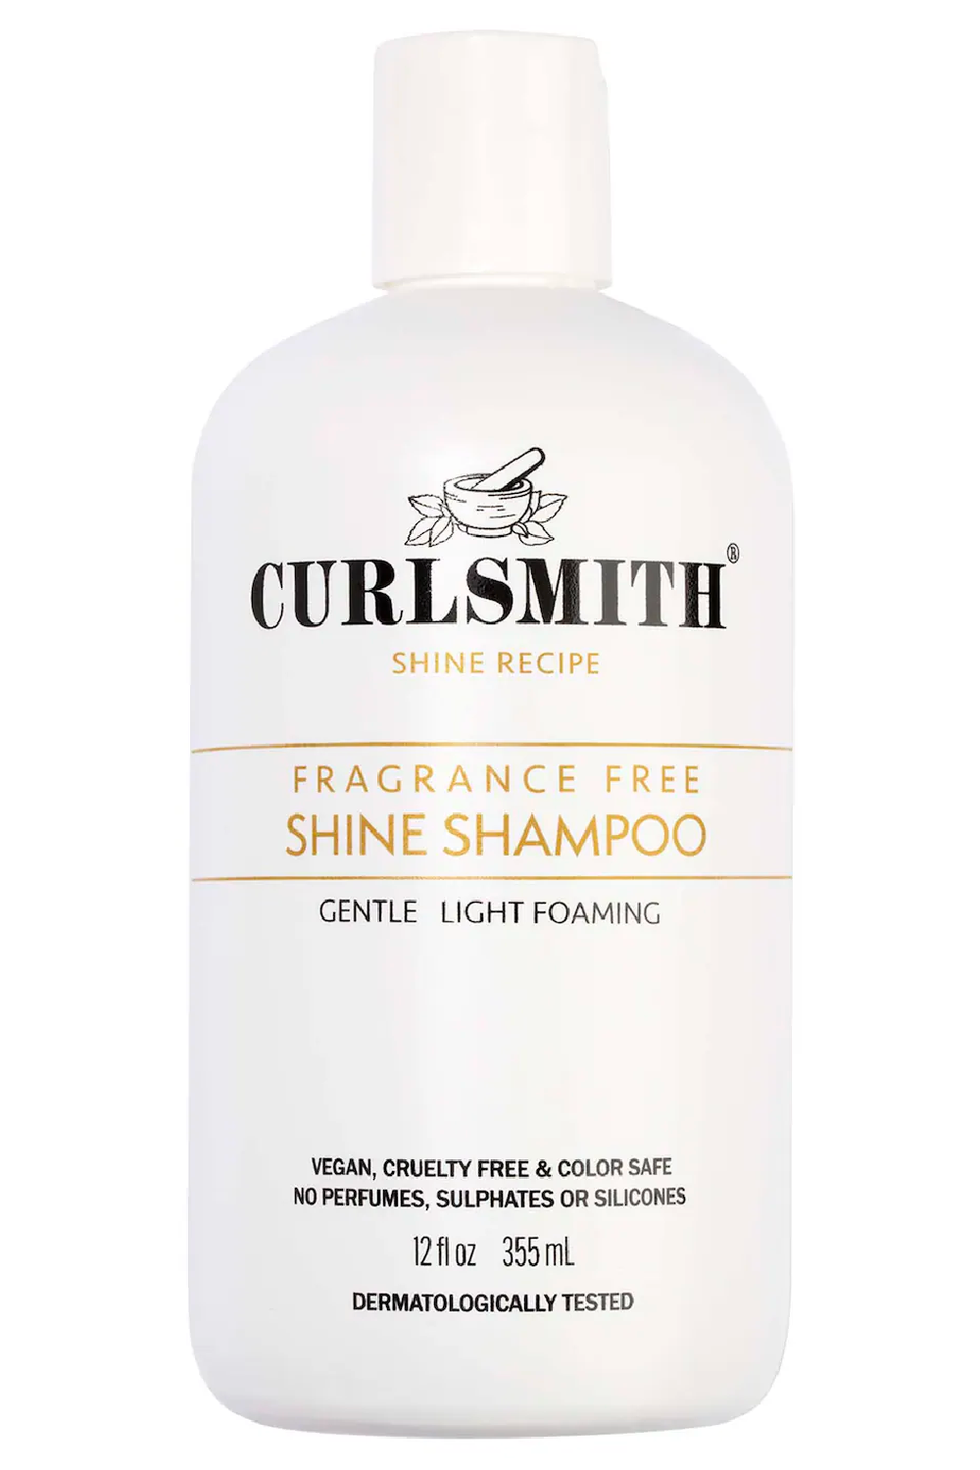 Shine Shampoo